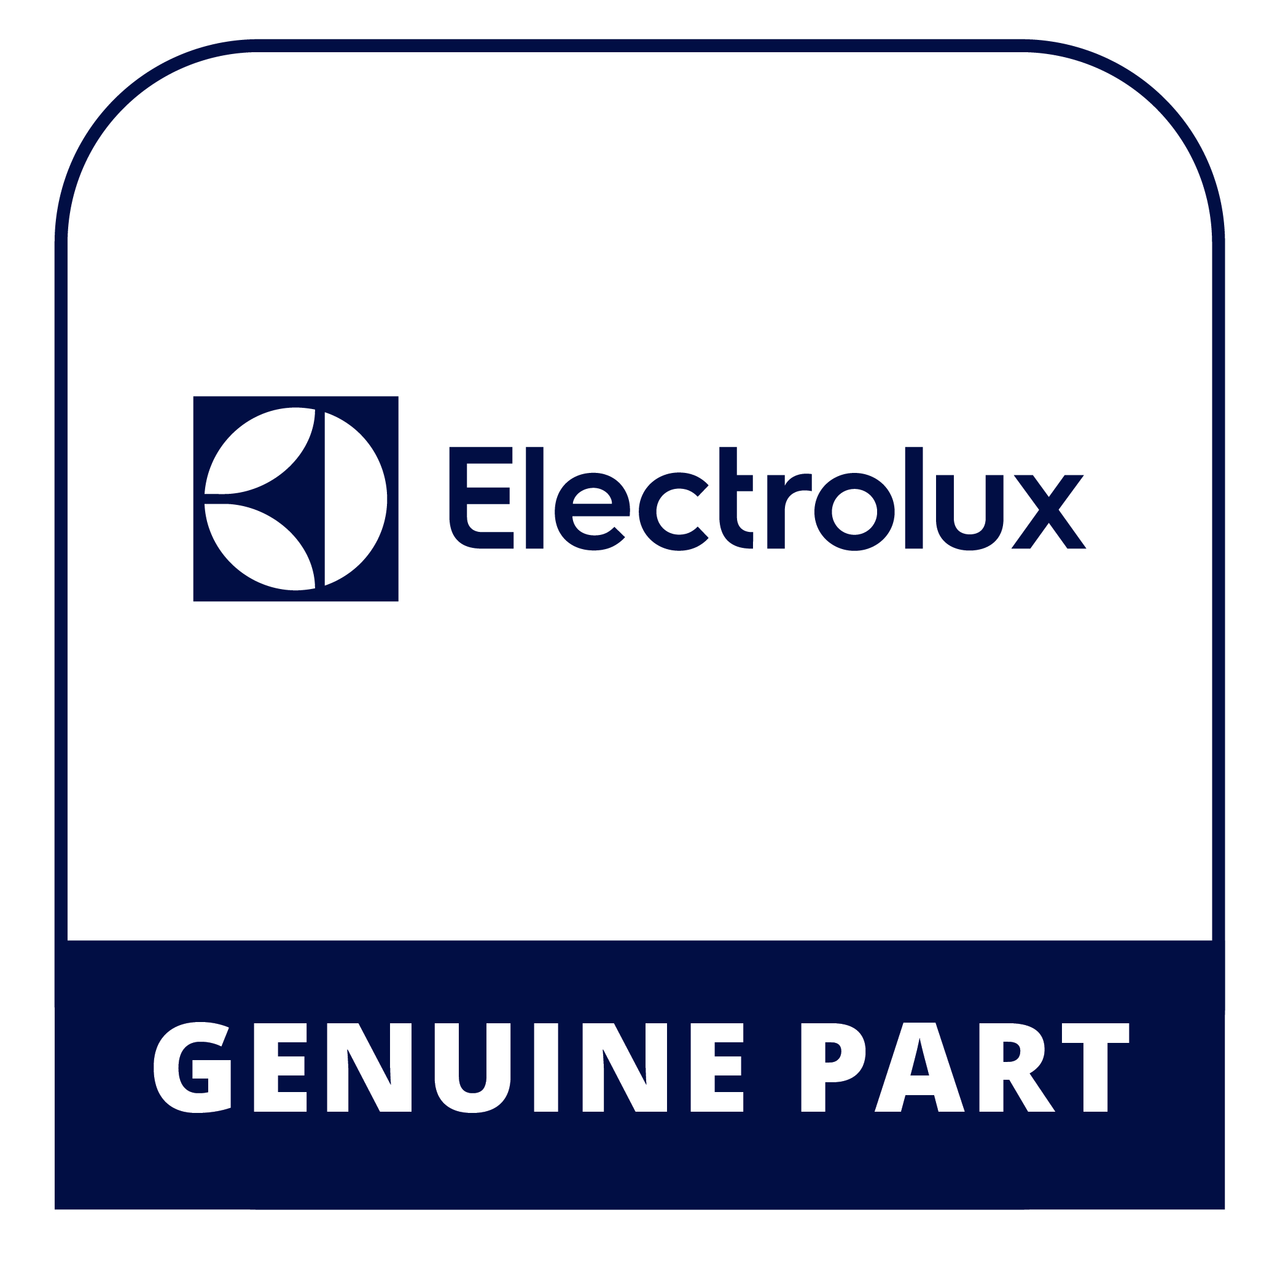 Frigidaire - Electrolux 5304471077 Capacitor - Genuine Electrolux Part